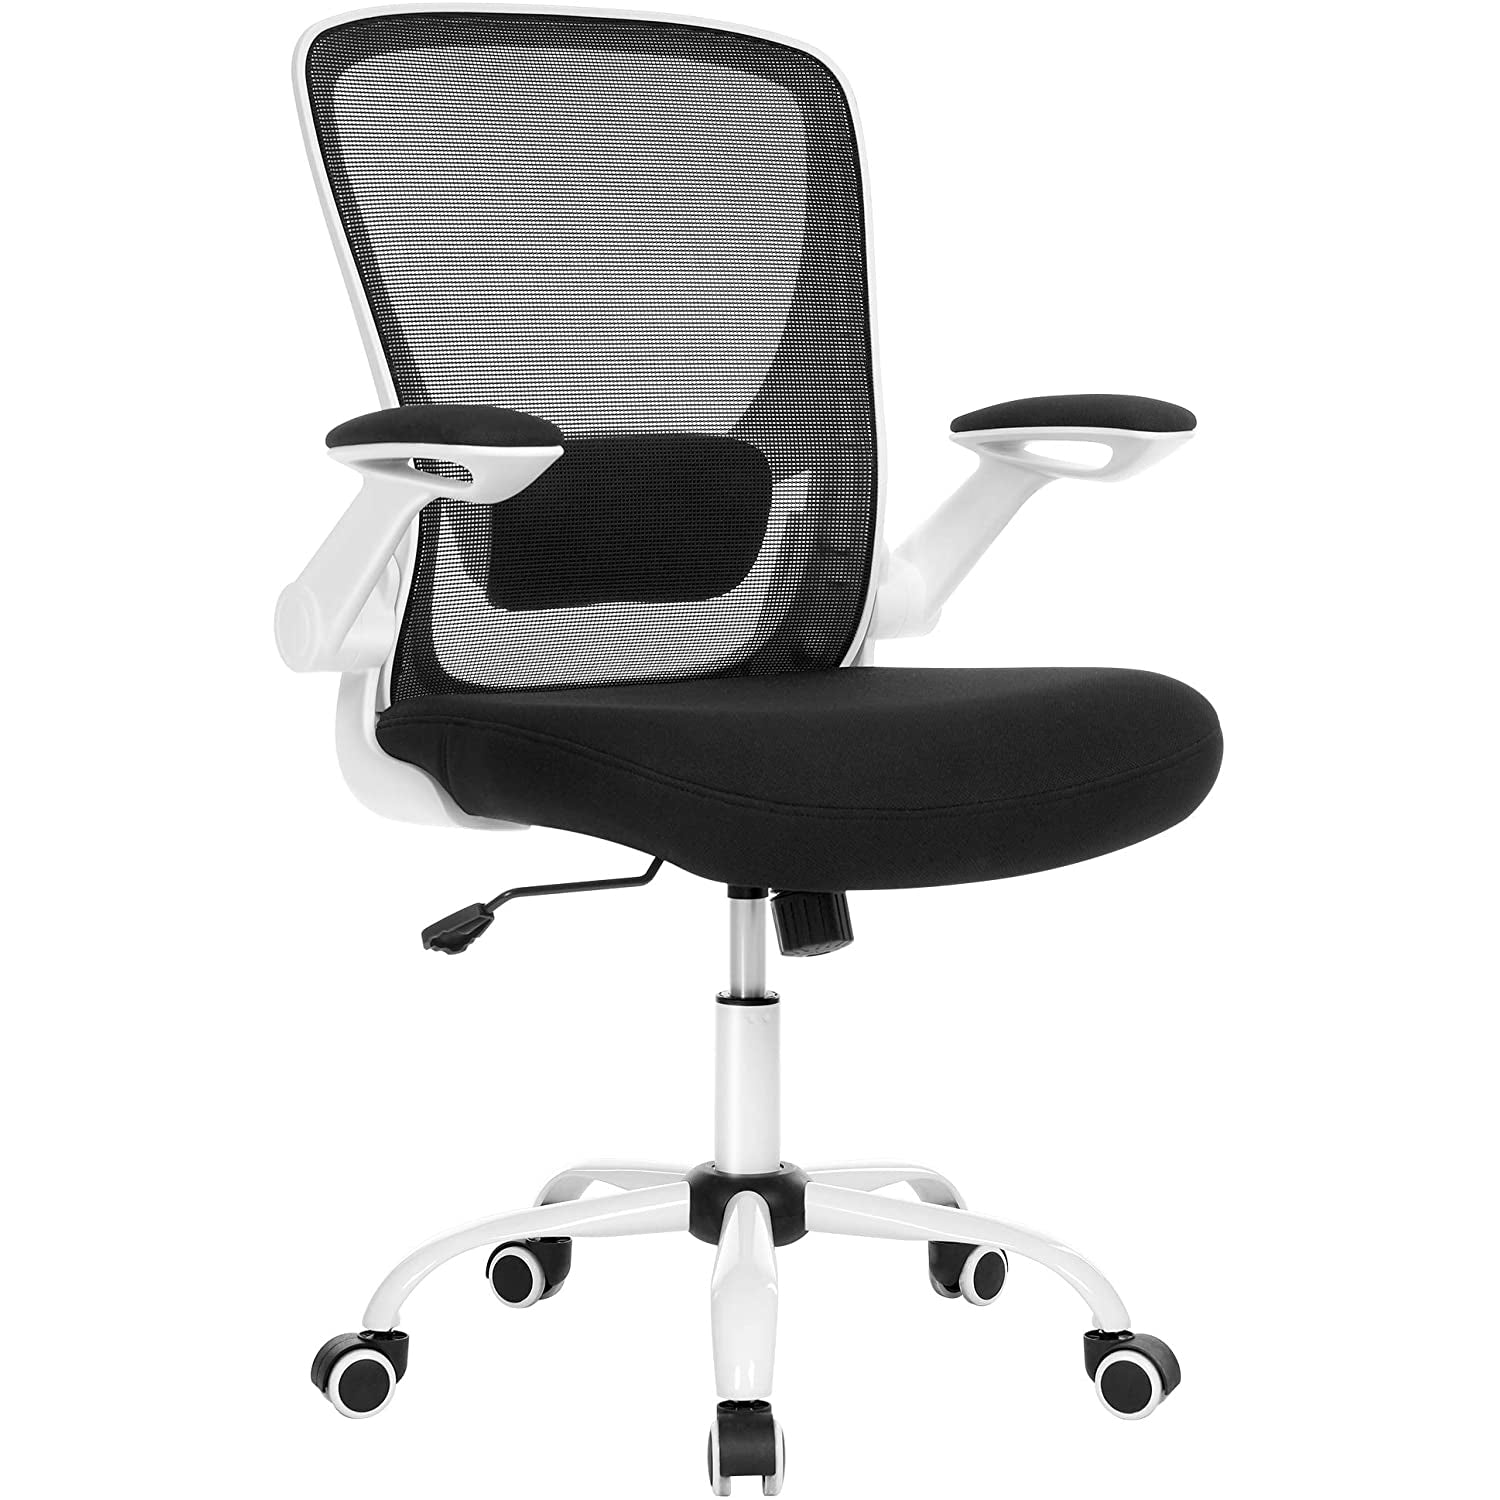 Nancy's Walker Office chair - Office chair - Mesh cover - Ergonomic - Adjustable lumbar support - White - Black - 66 x 60 x (99-107) cm